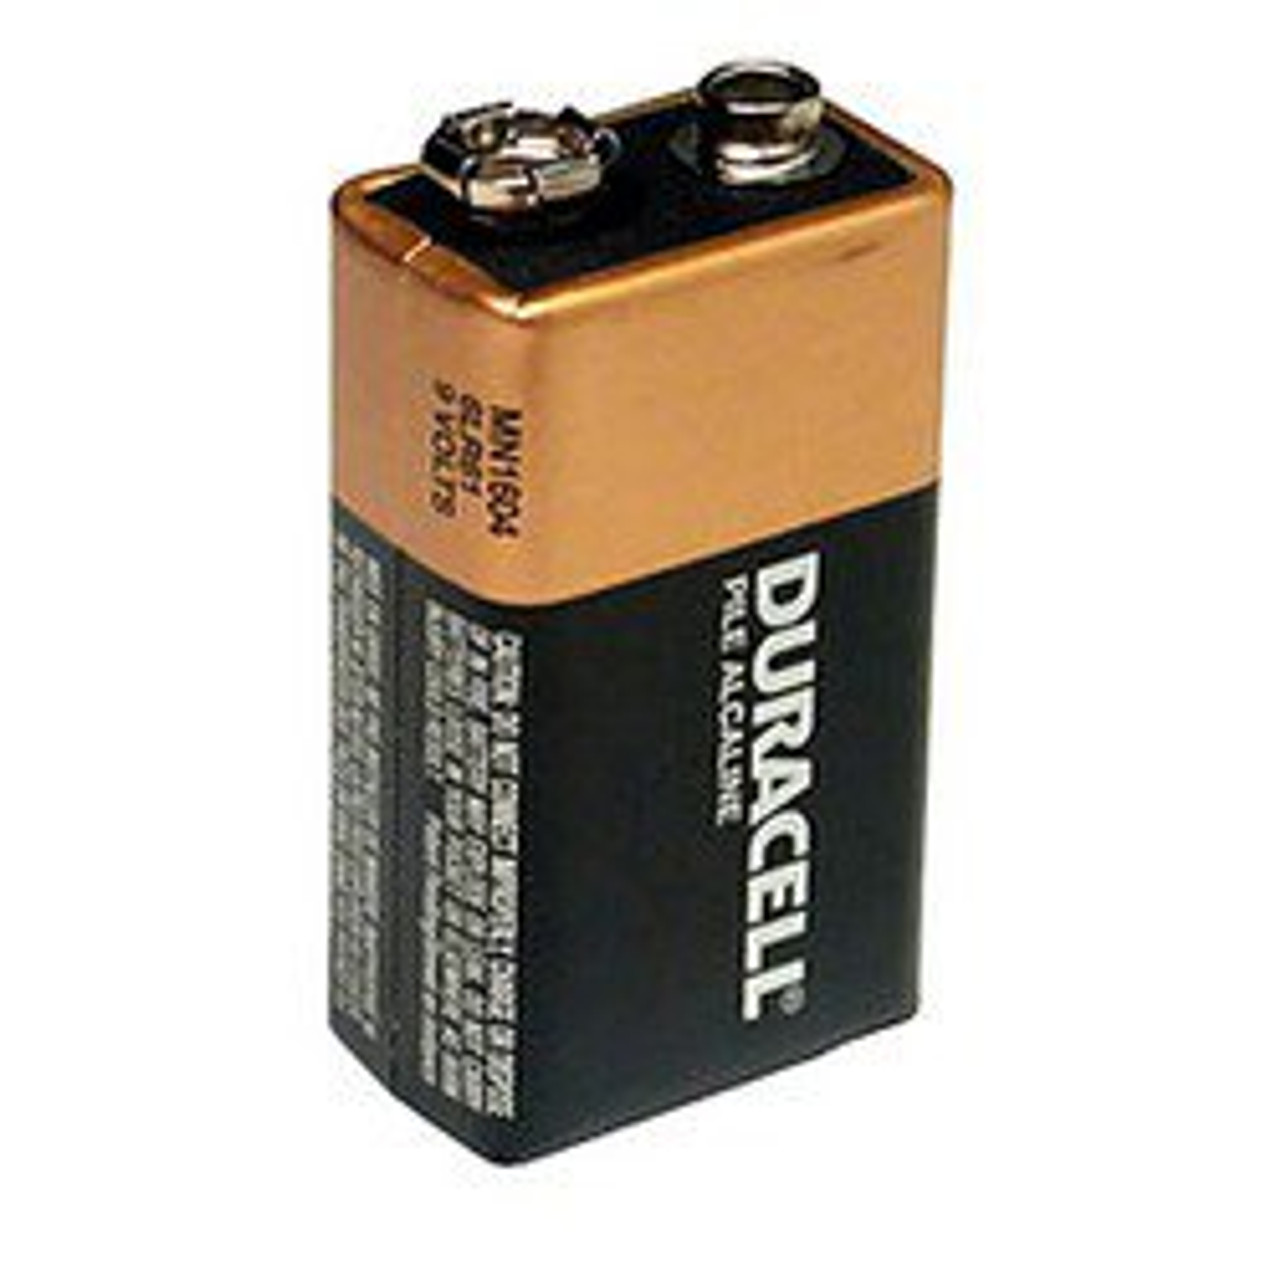 Joblot of 12 x Duracell 9V Batteries - - - pack bateries battery